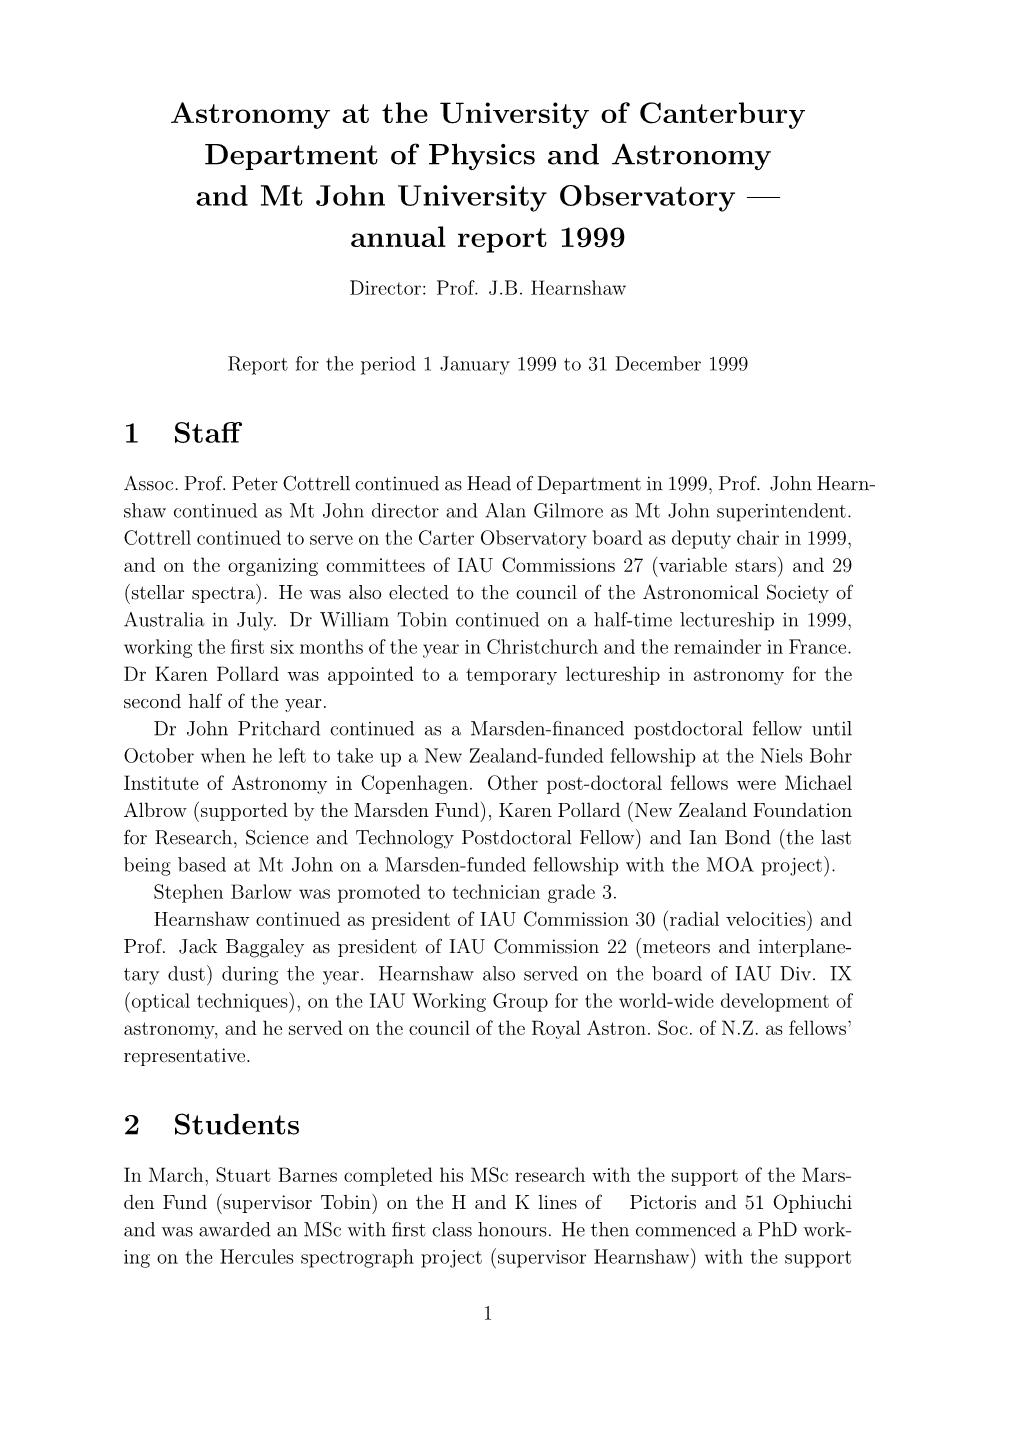 Annual Report 1999